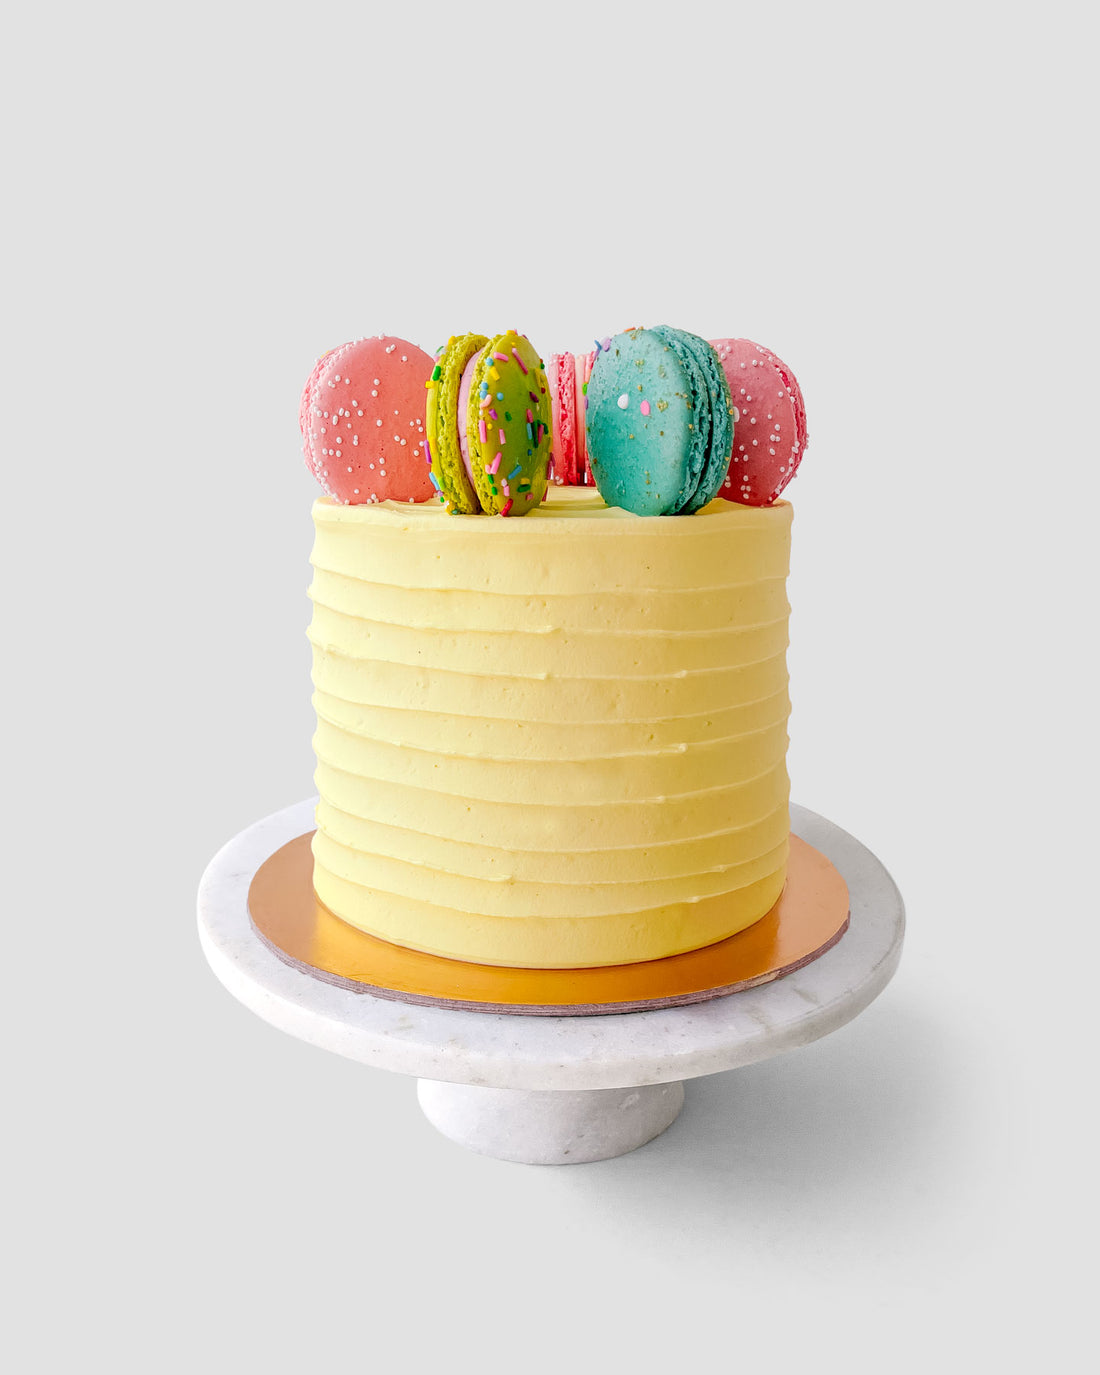 Frankfurt Crown Cake stock image. Image of recipe, bundt - 135454561